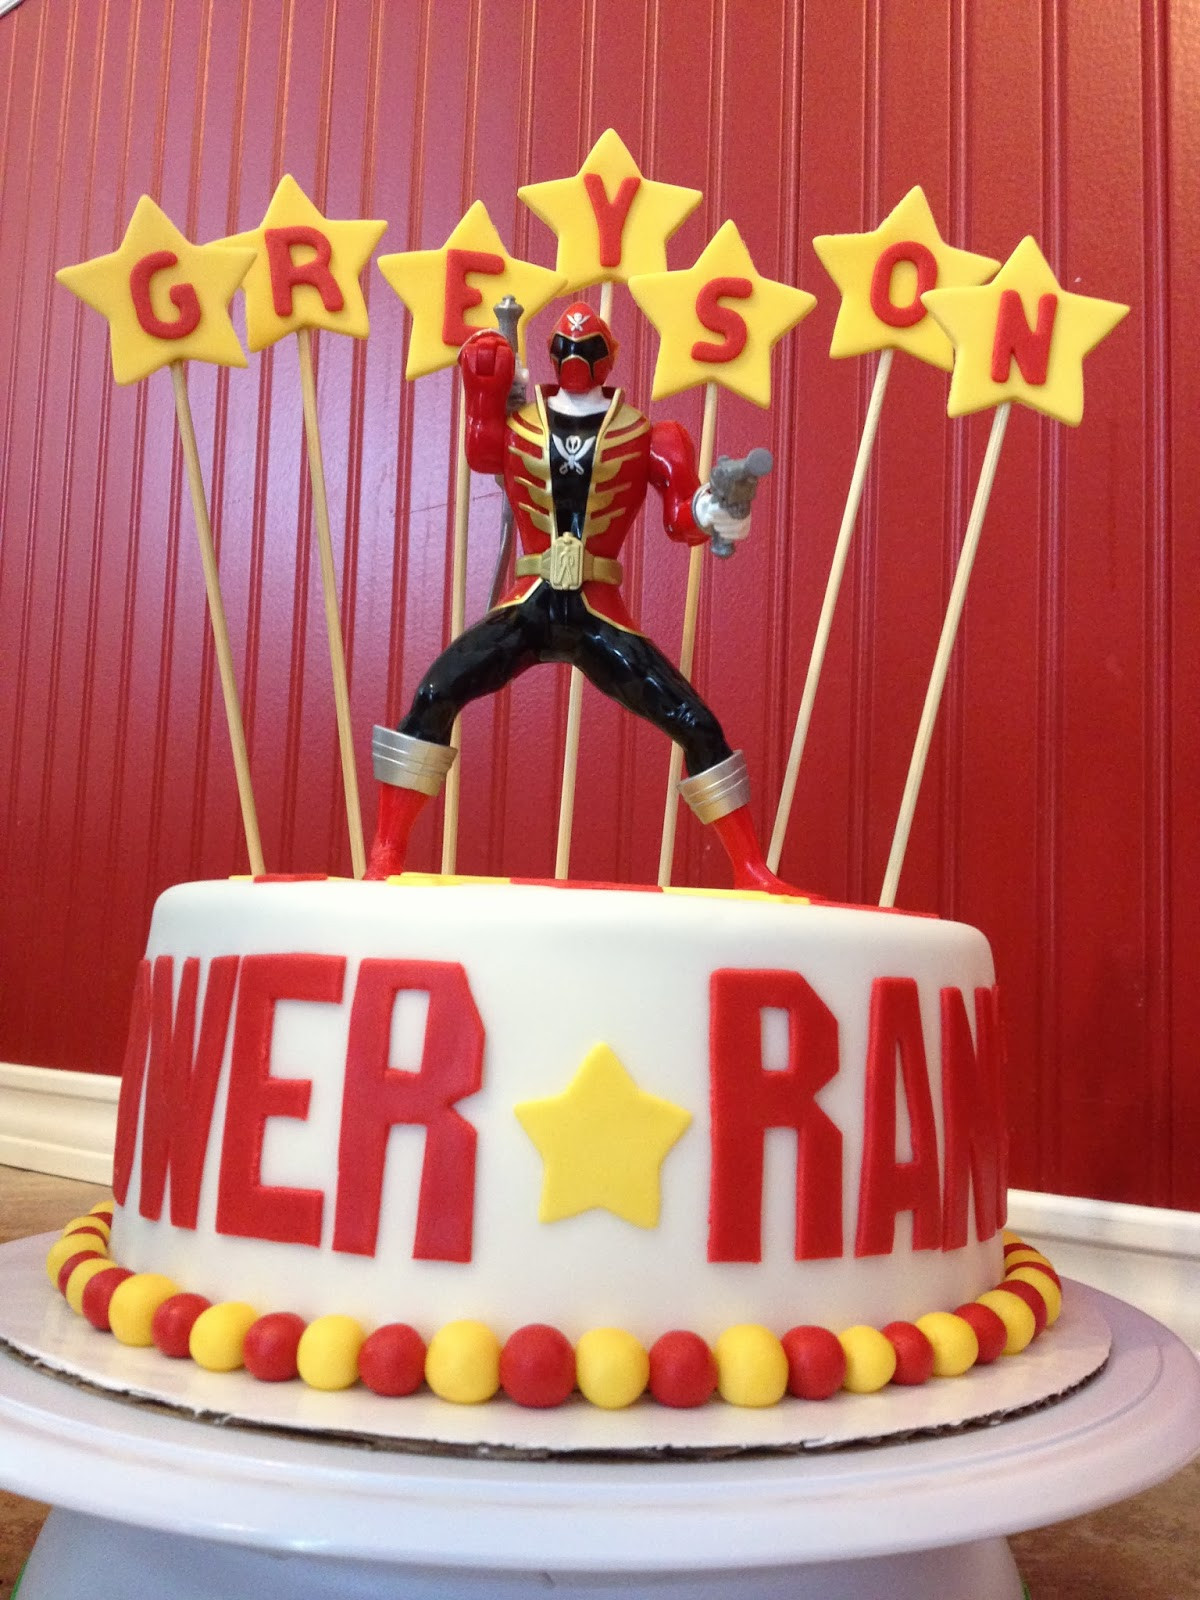 Best ideas about Power Ranger Birthday Cake
. Save or Pin Sugar Love Cake Design Power Rangers Birthday Cake Now.